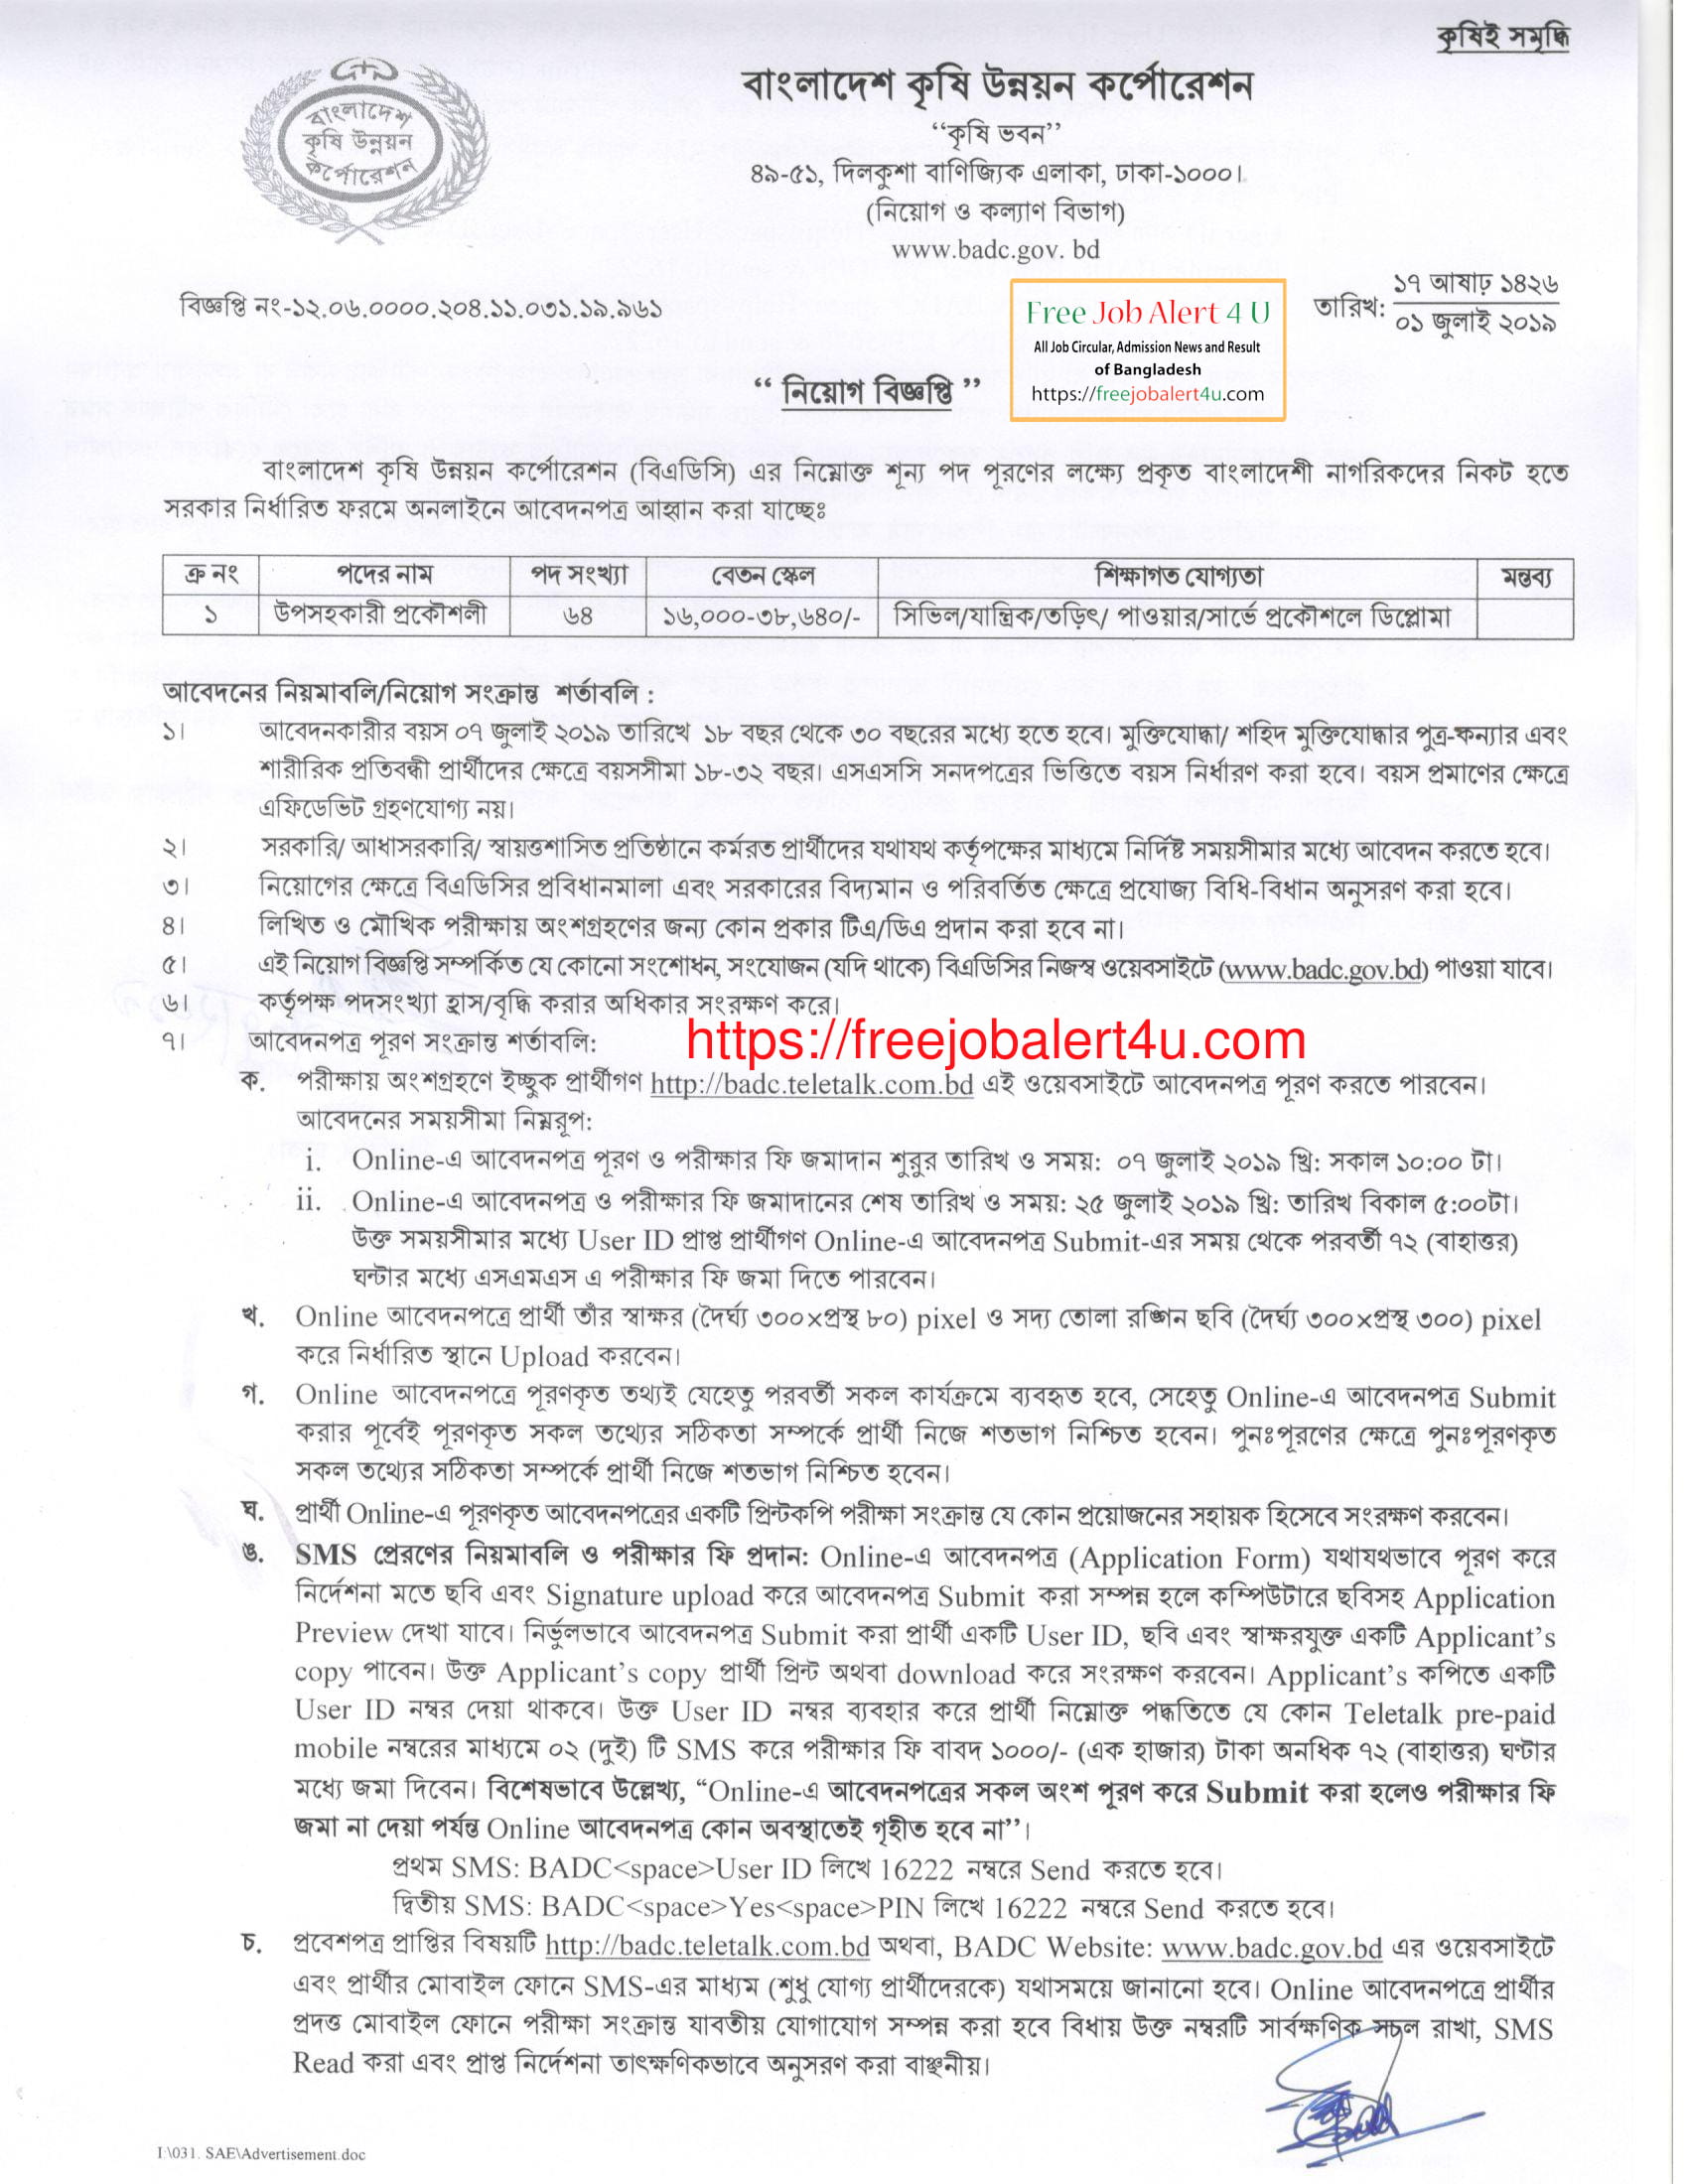 Bangladesh Agricultural Development Corporation (BADC) Job Circular 2019